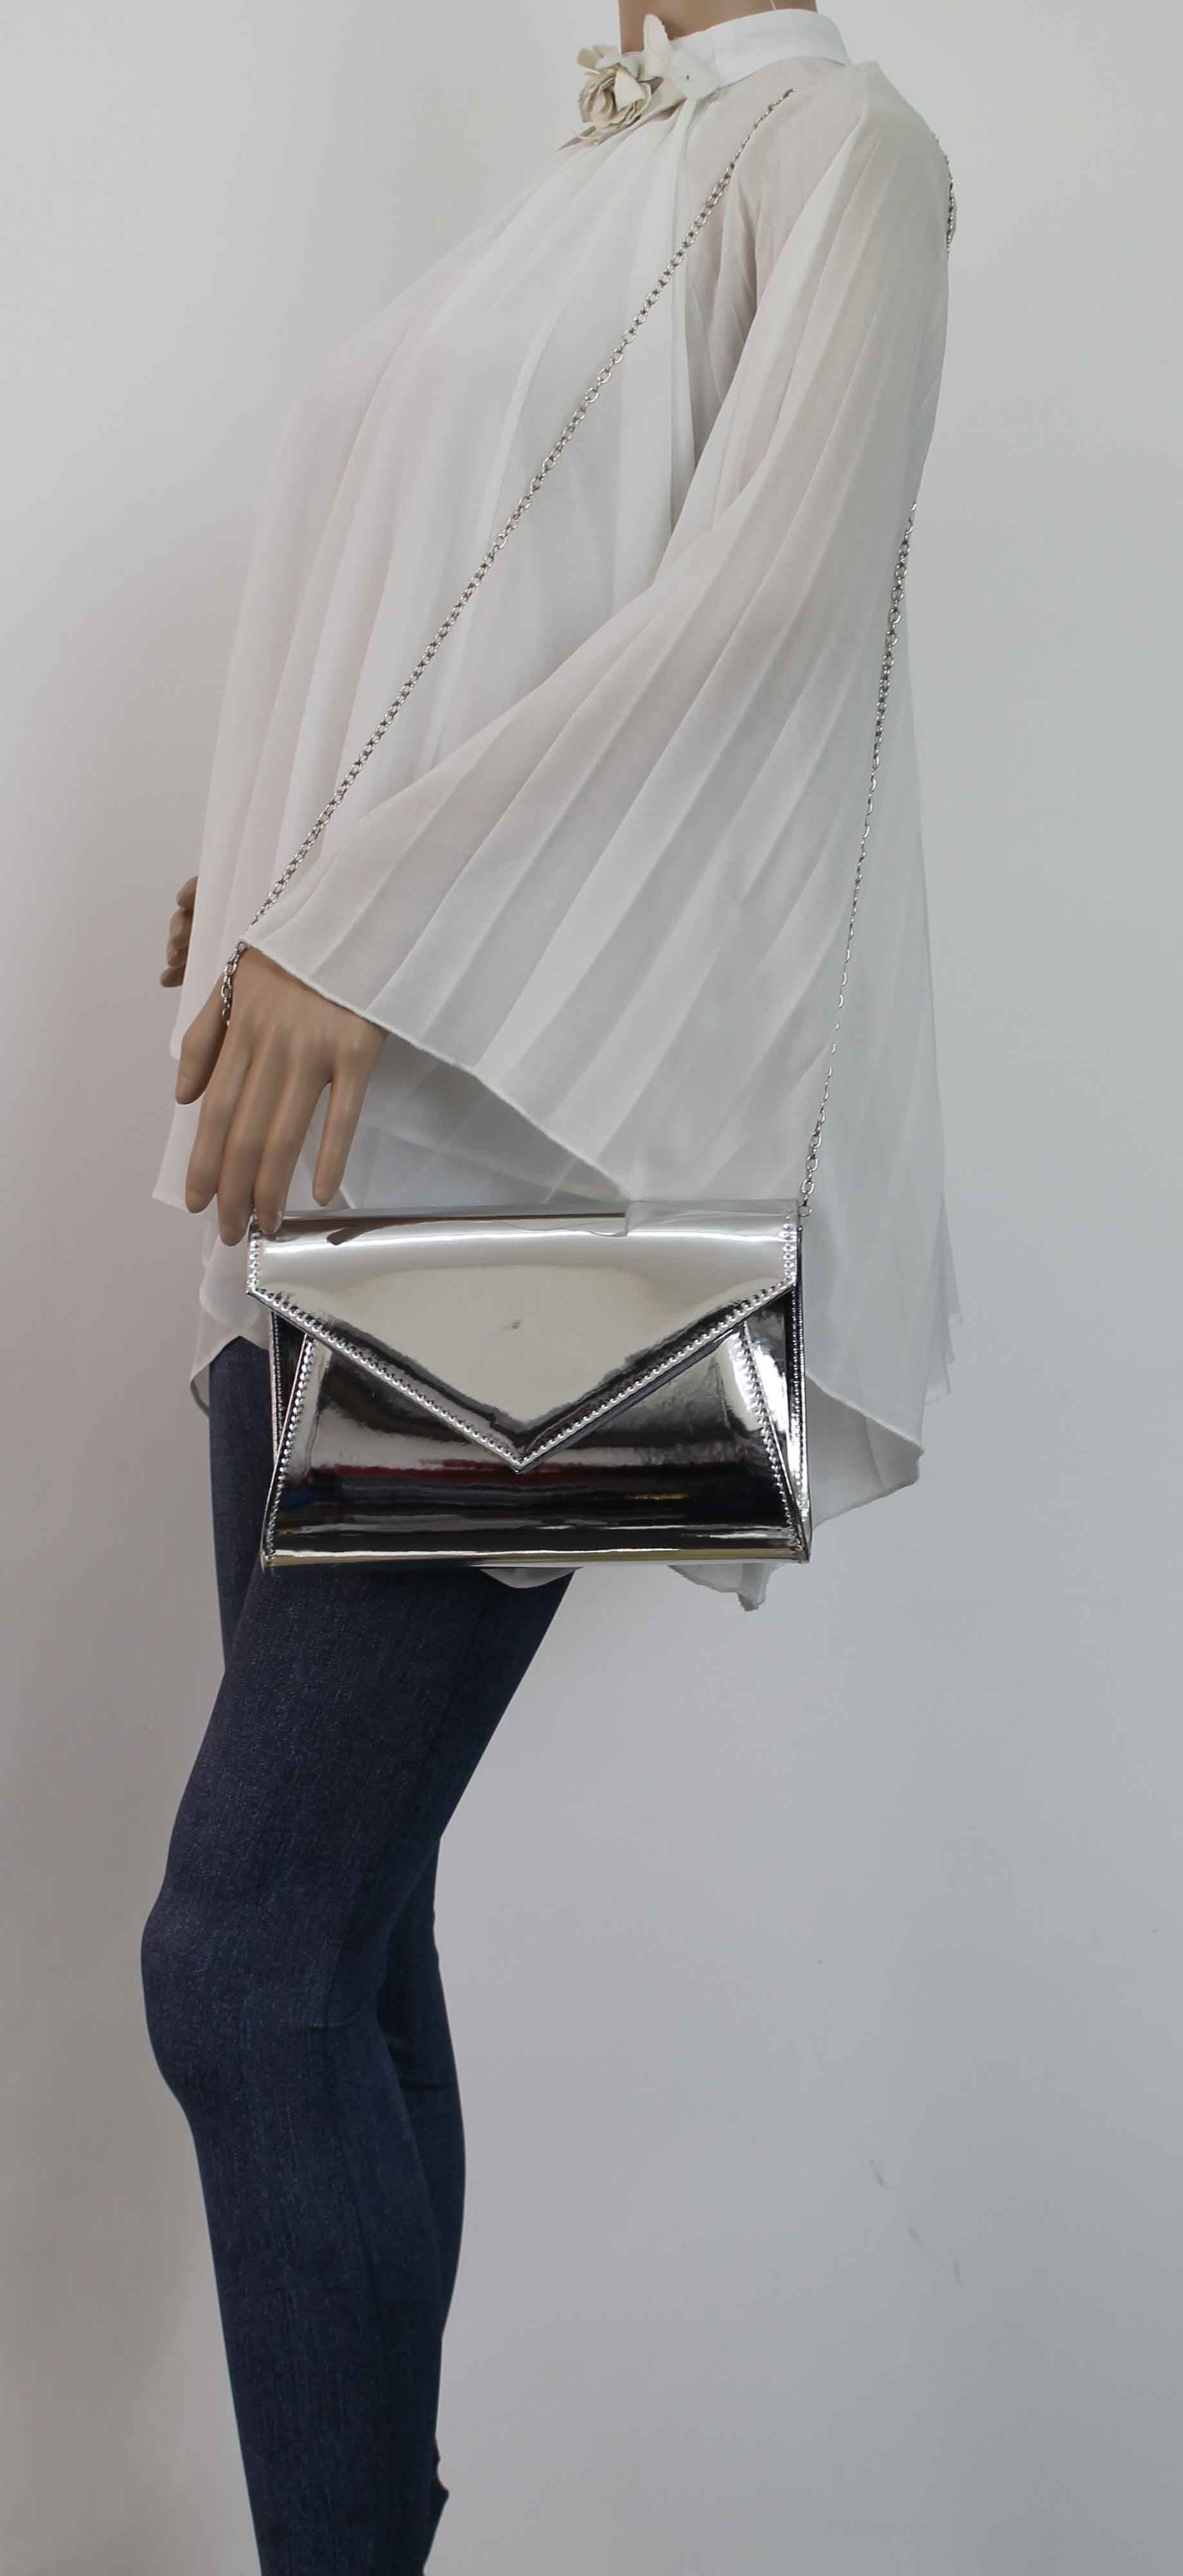 SWANKYSWANS Lenny Shiny Clutch Bag Silver Cute Cheap Clutch Bag For Weddings School and Work